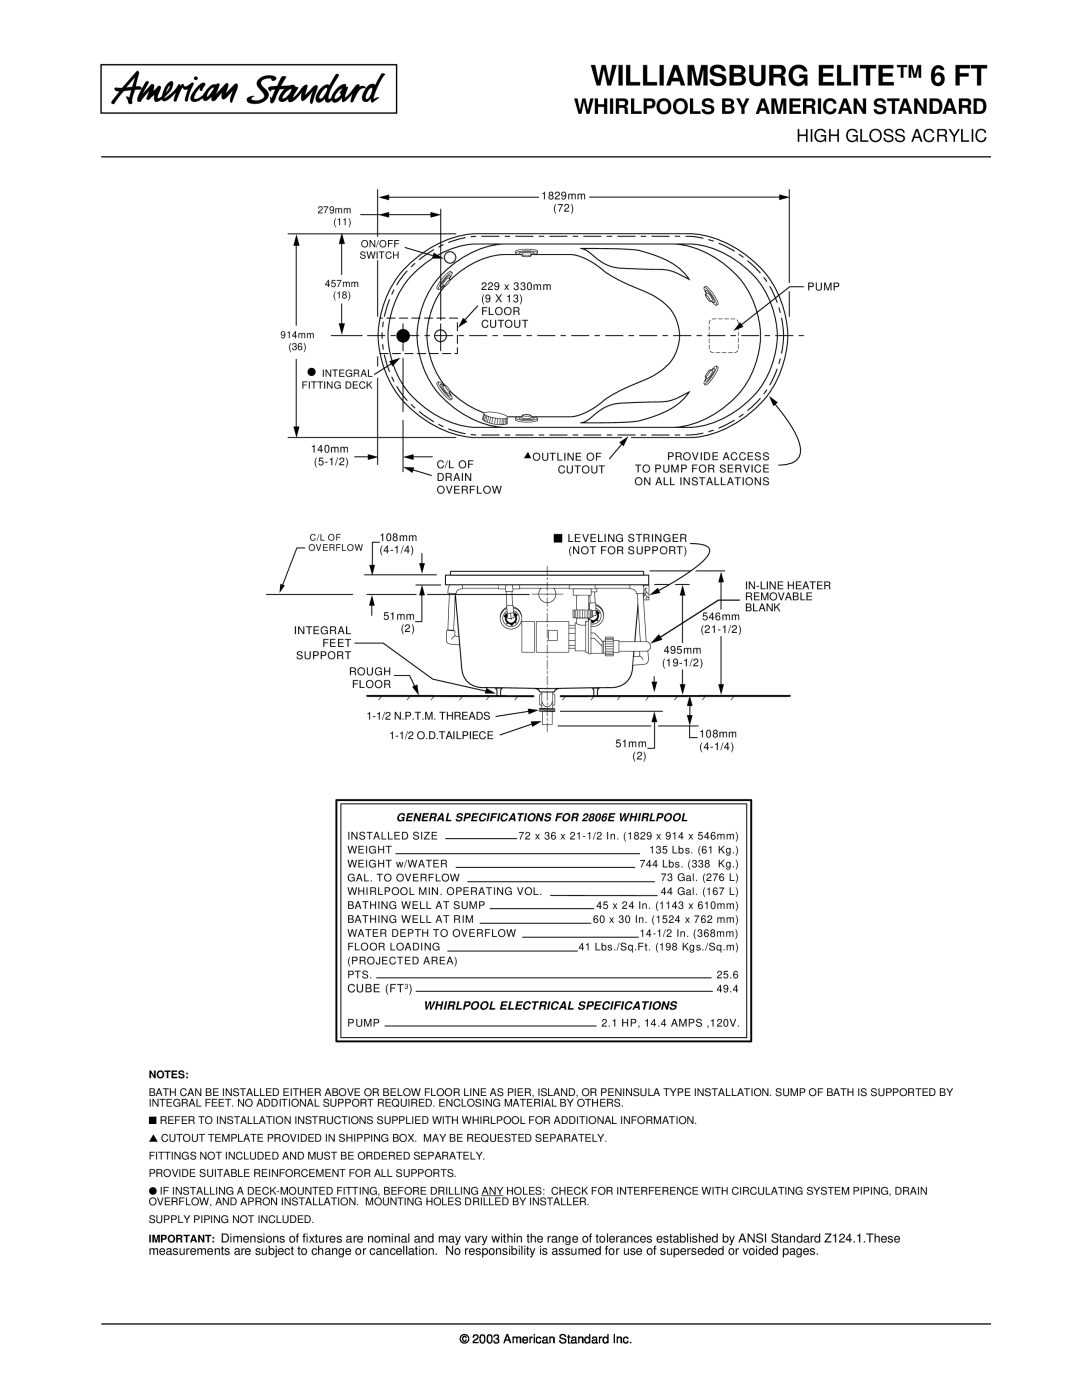 American Standard 2806EC WILLIAMSBURG ELITE 6 FT, Whirlpools By American Standard, CUBE FT3, American Standard Inc, Notes 